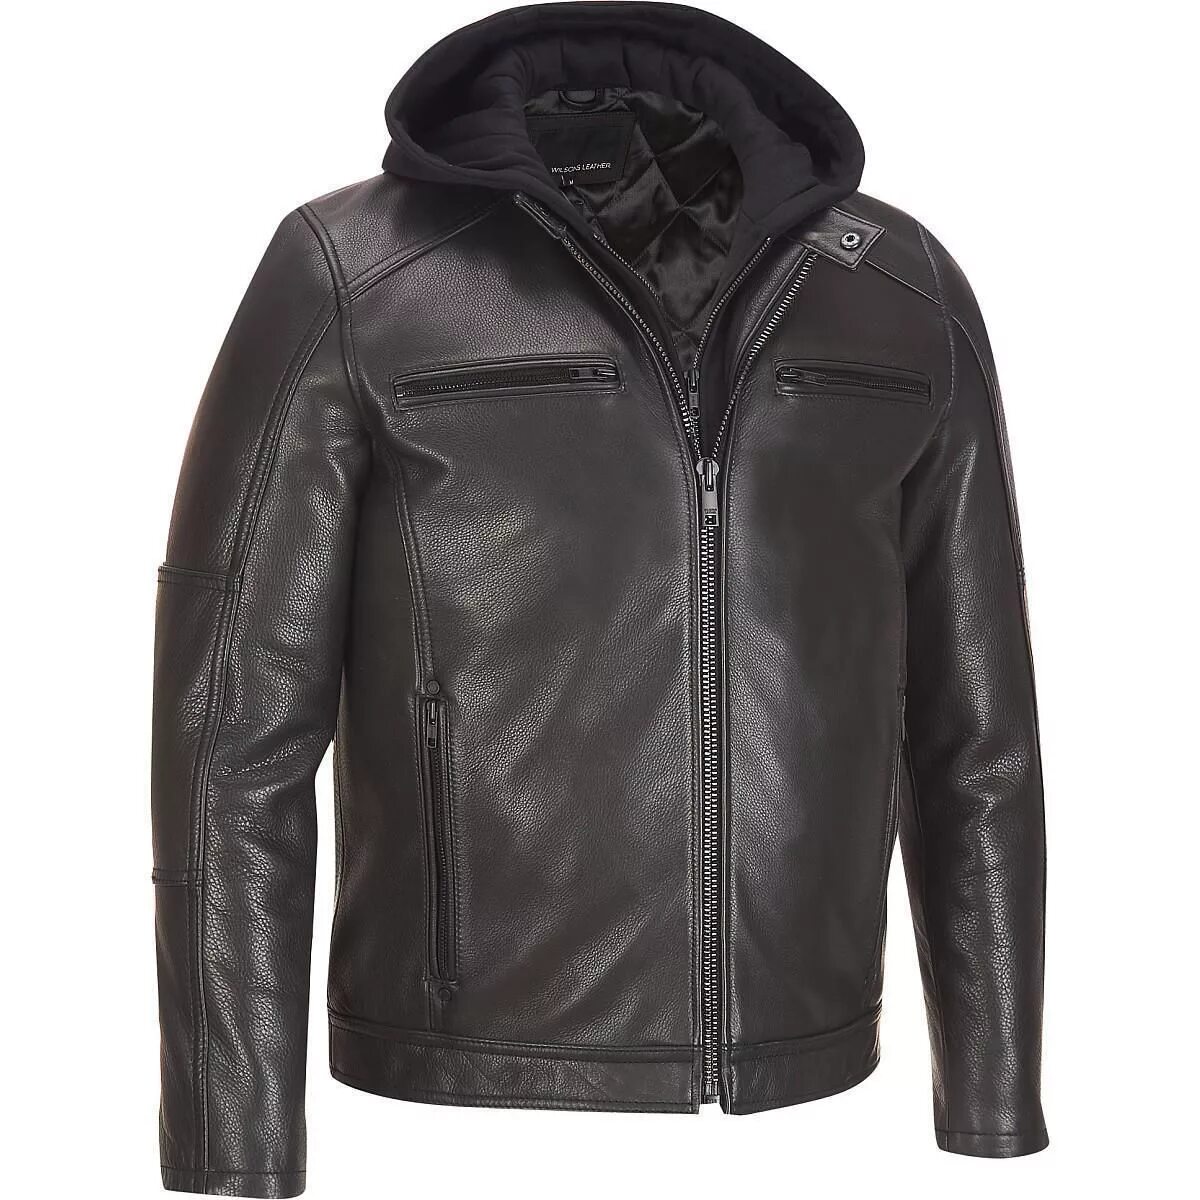 Кожаная куртка Leather Air Jacket 38118. Куртка Radloff 1927 кожаная мужская. Wilsons Leather куртка. La Biali мужская куртка кожаная серая с капюшоном. Leather air